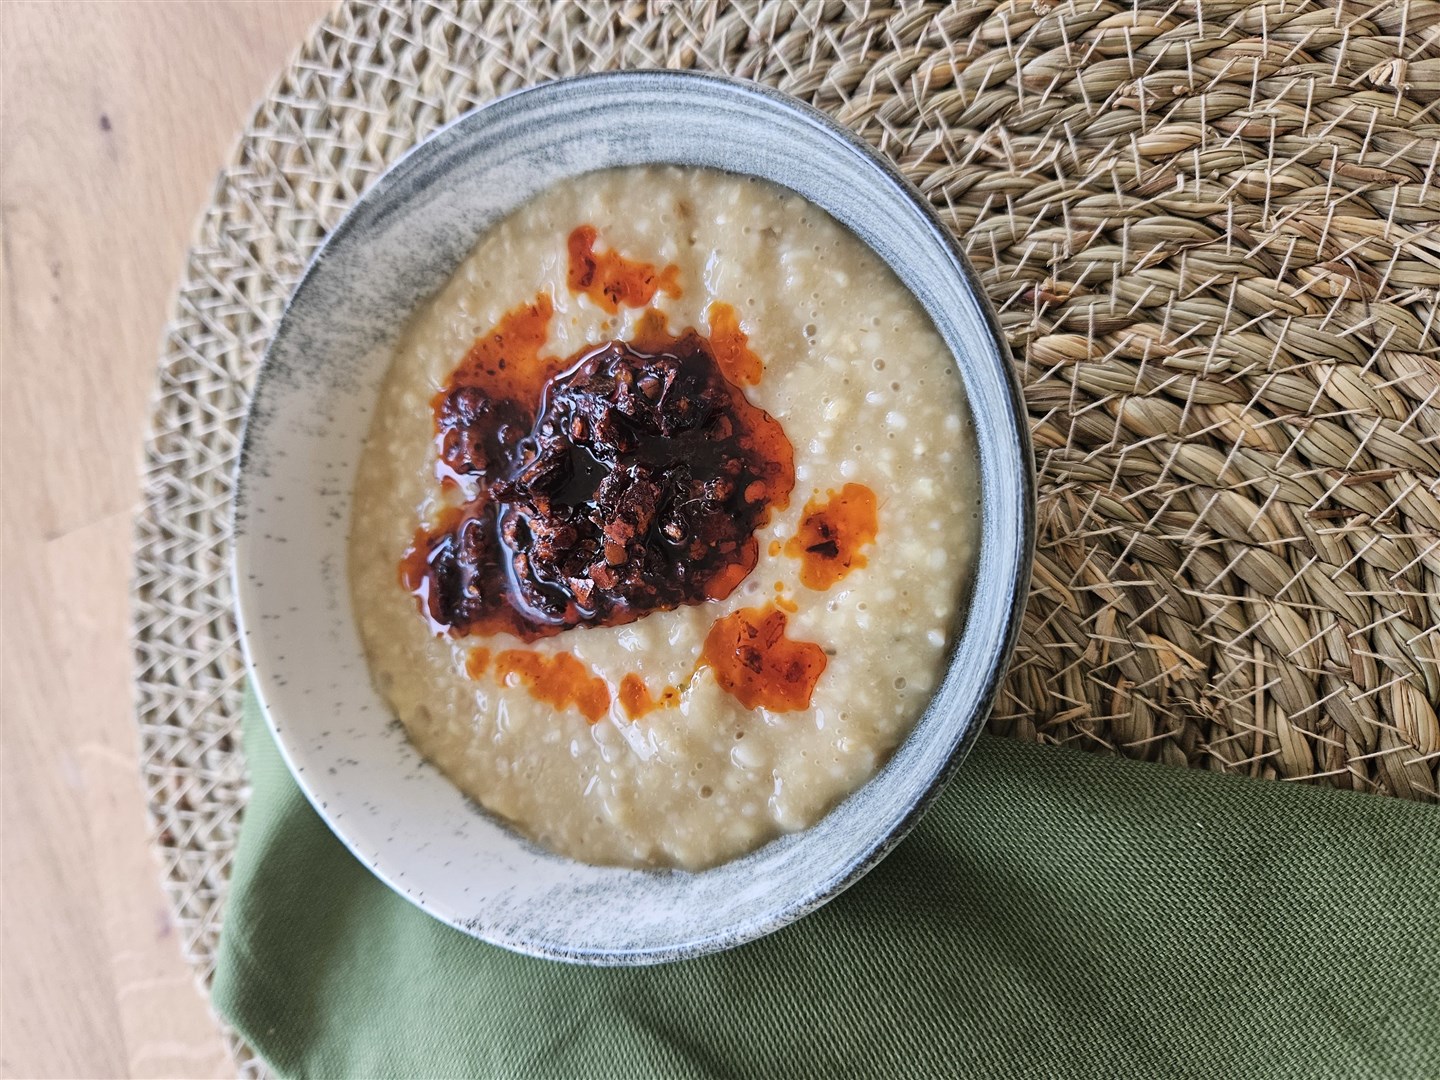 Porridge can be more than just breakfast!